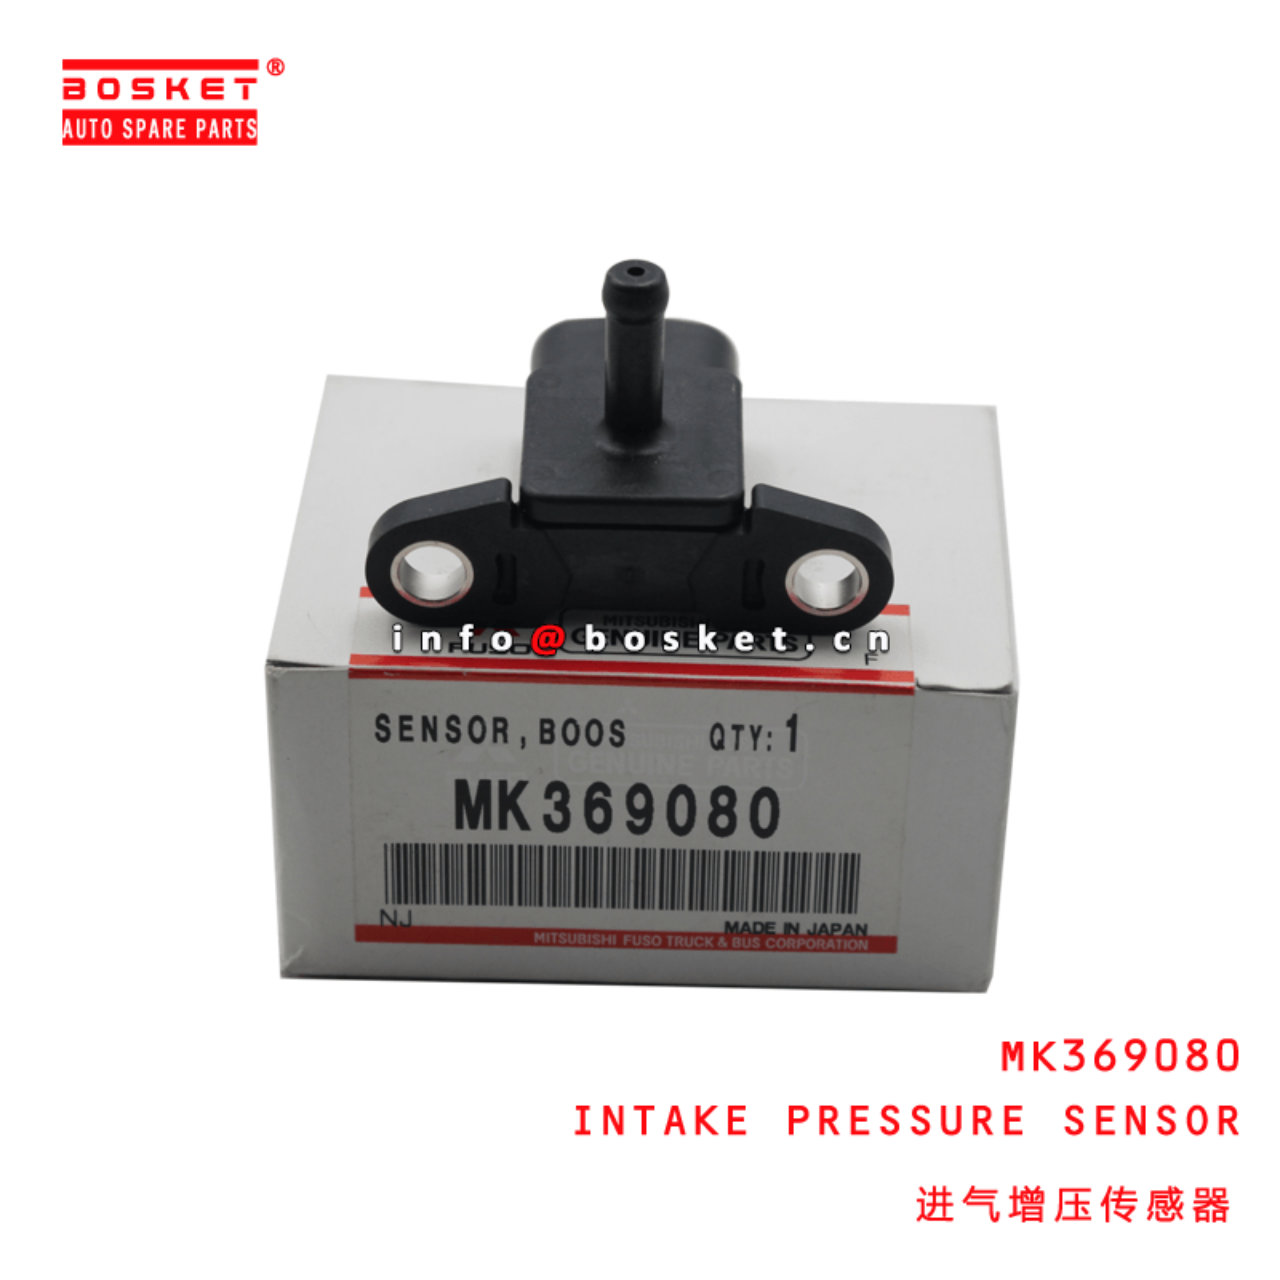 MK369080 Intake Pressure Sensor Suitable For MITSUBISHI FUSO 